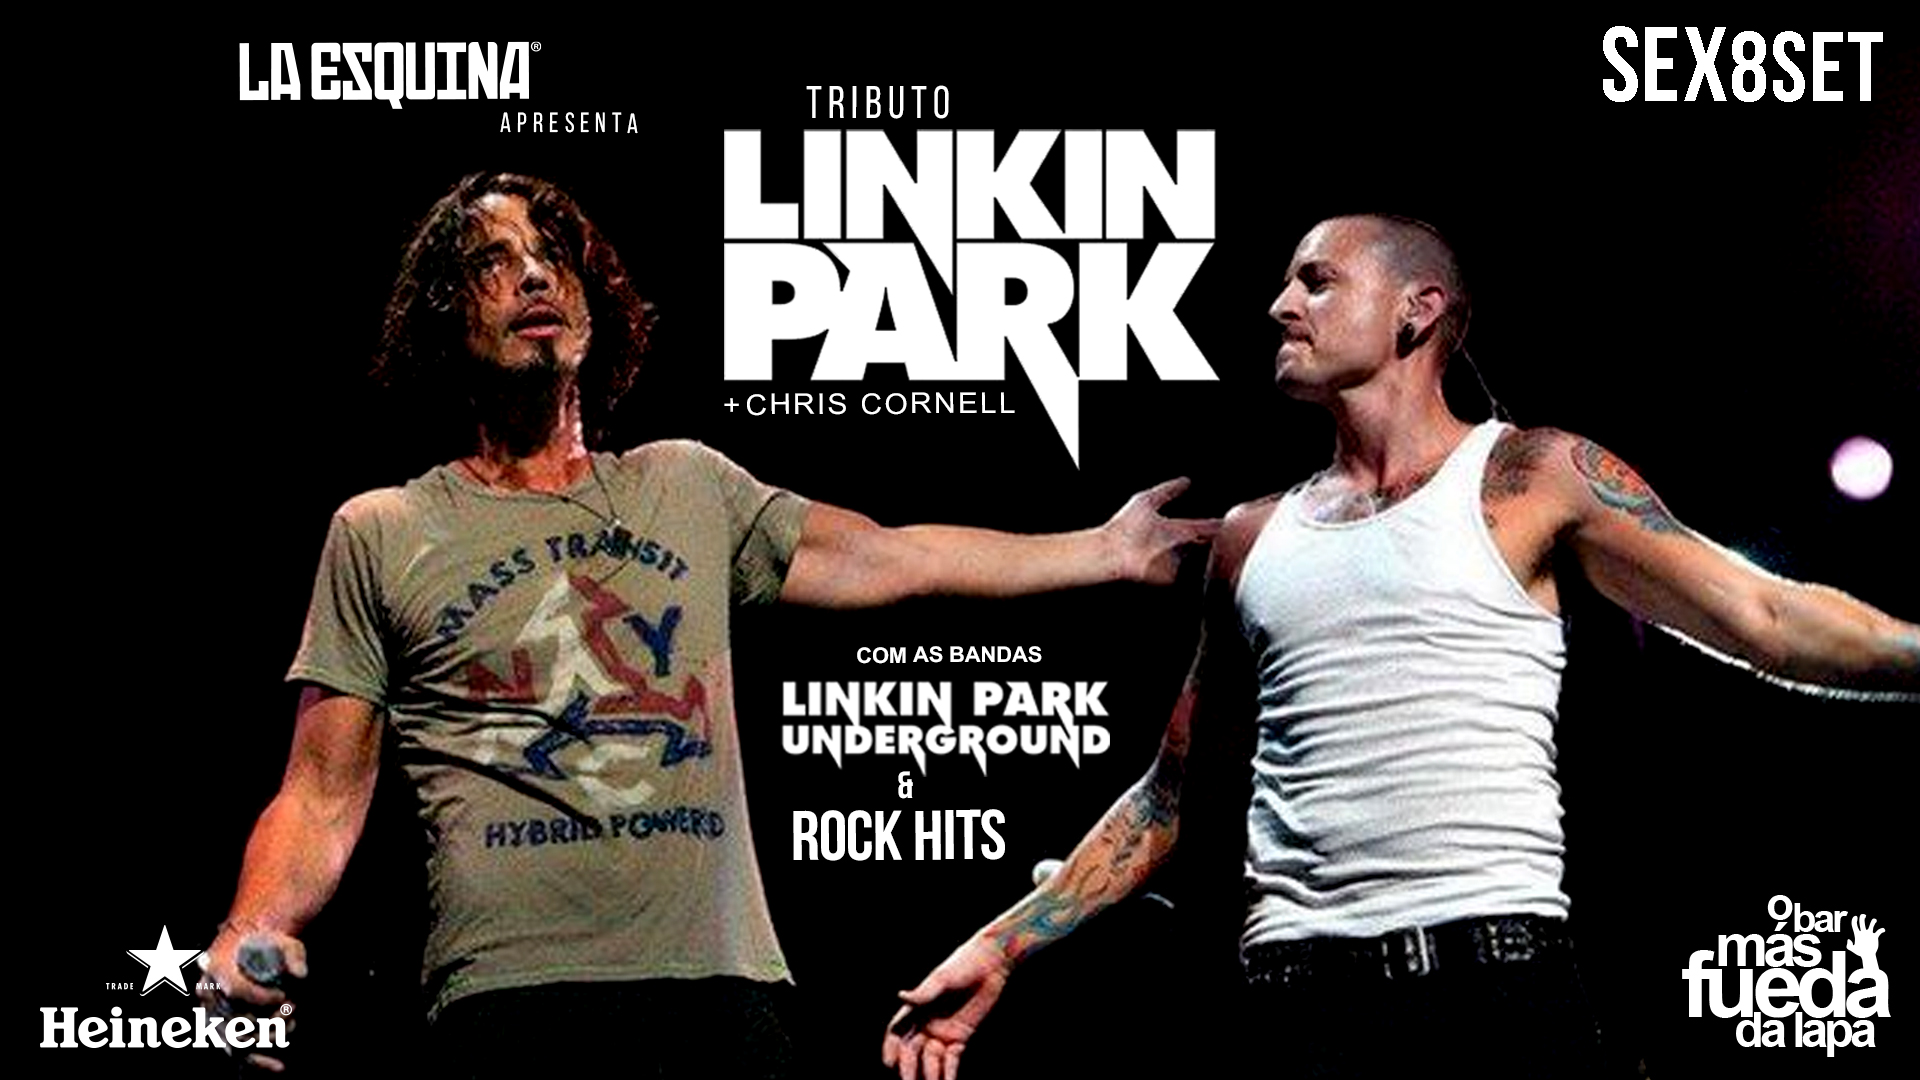 Sunday - Tributo Linkin Park + Chris Cornell